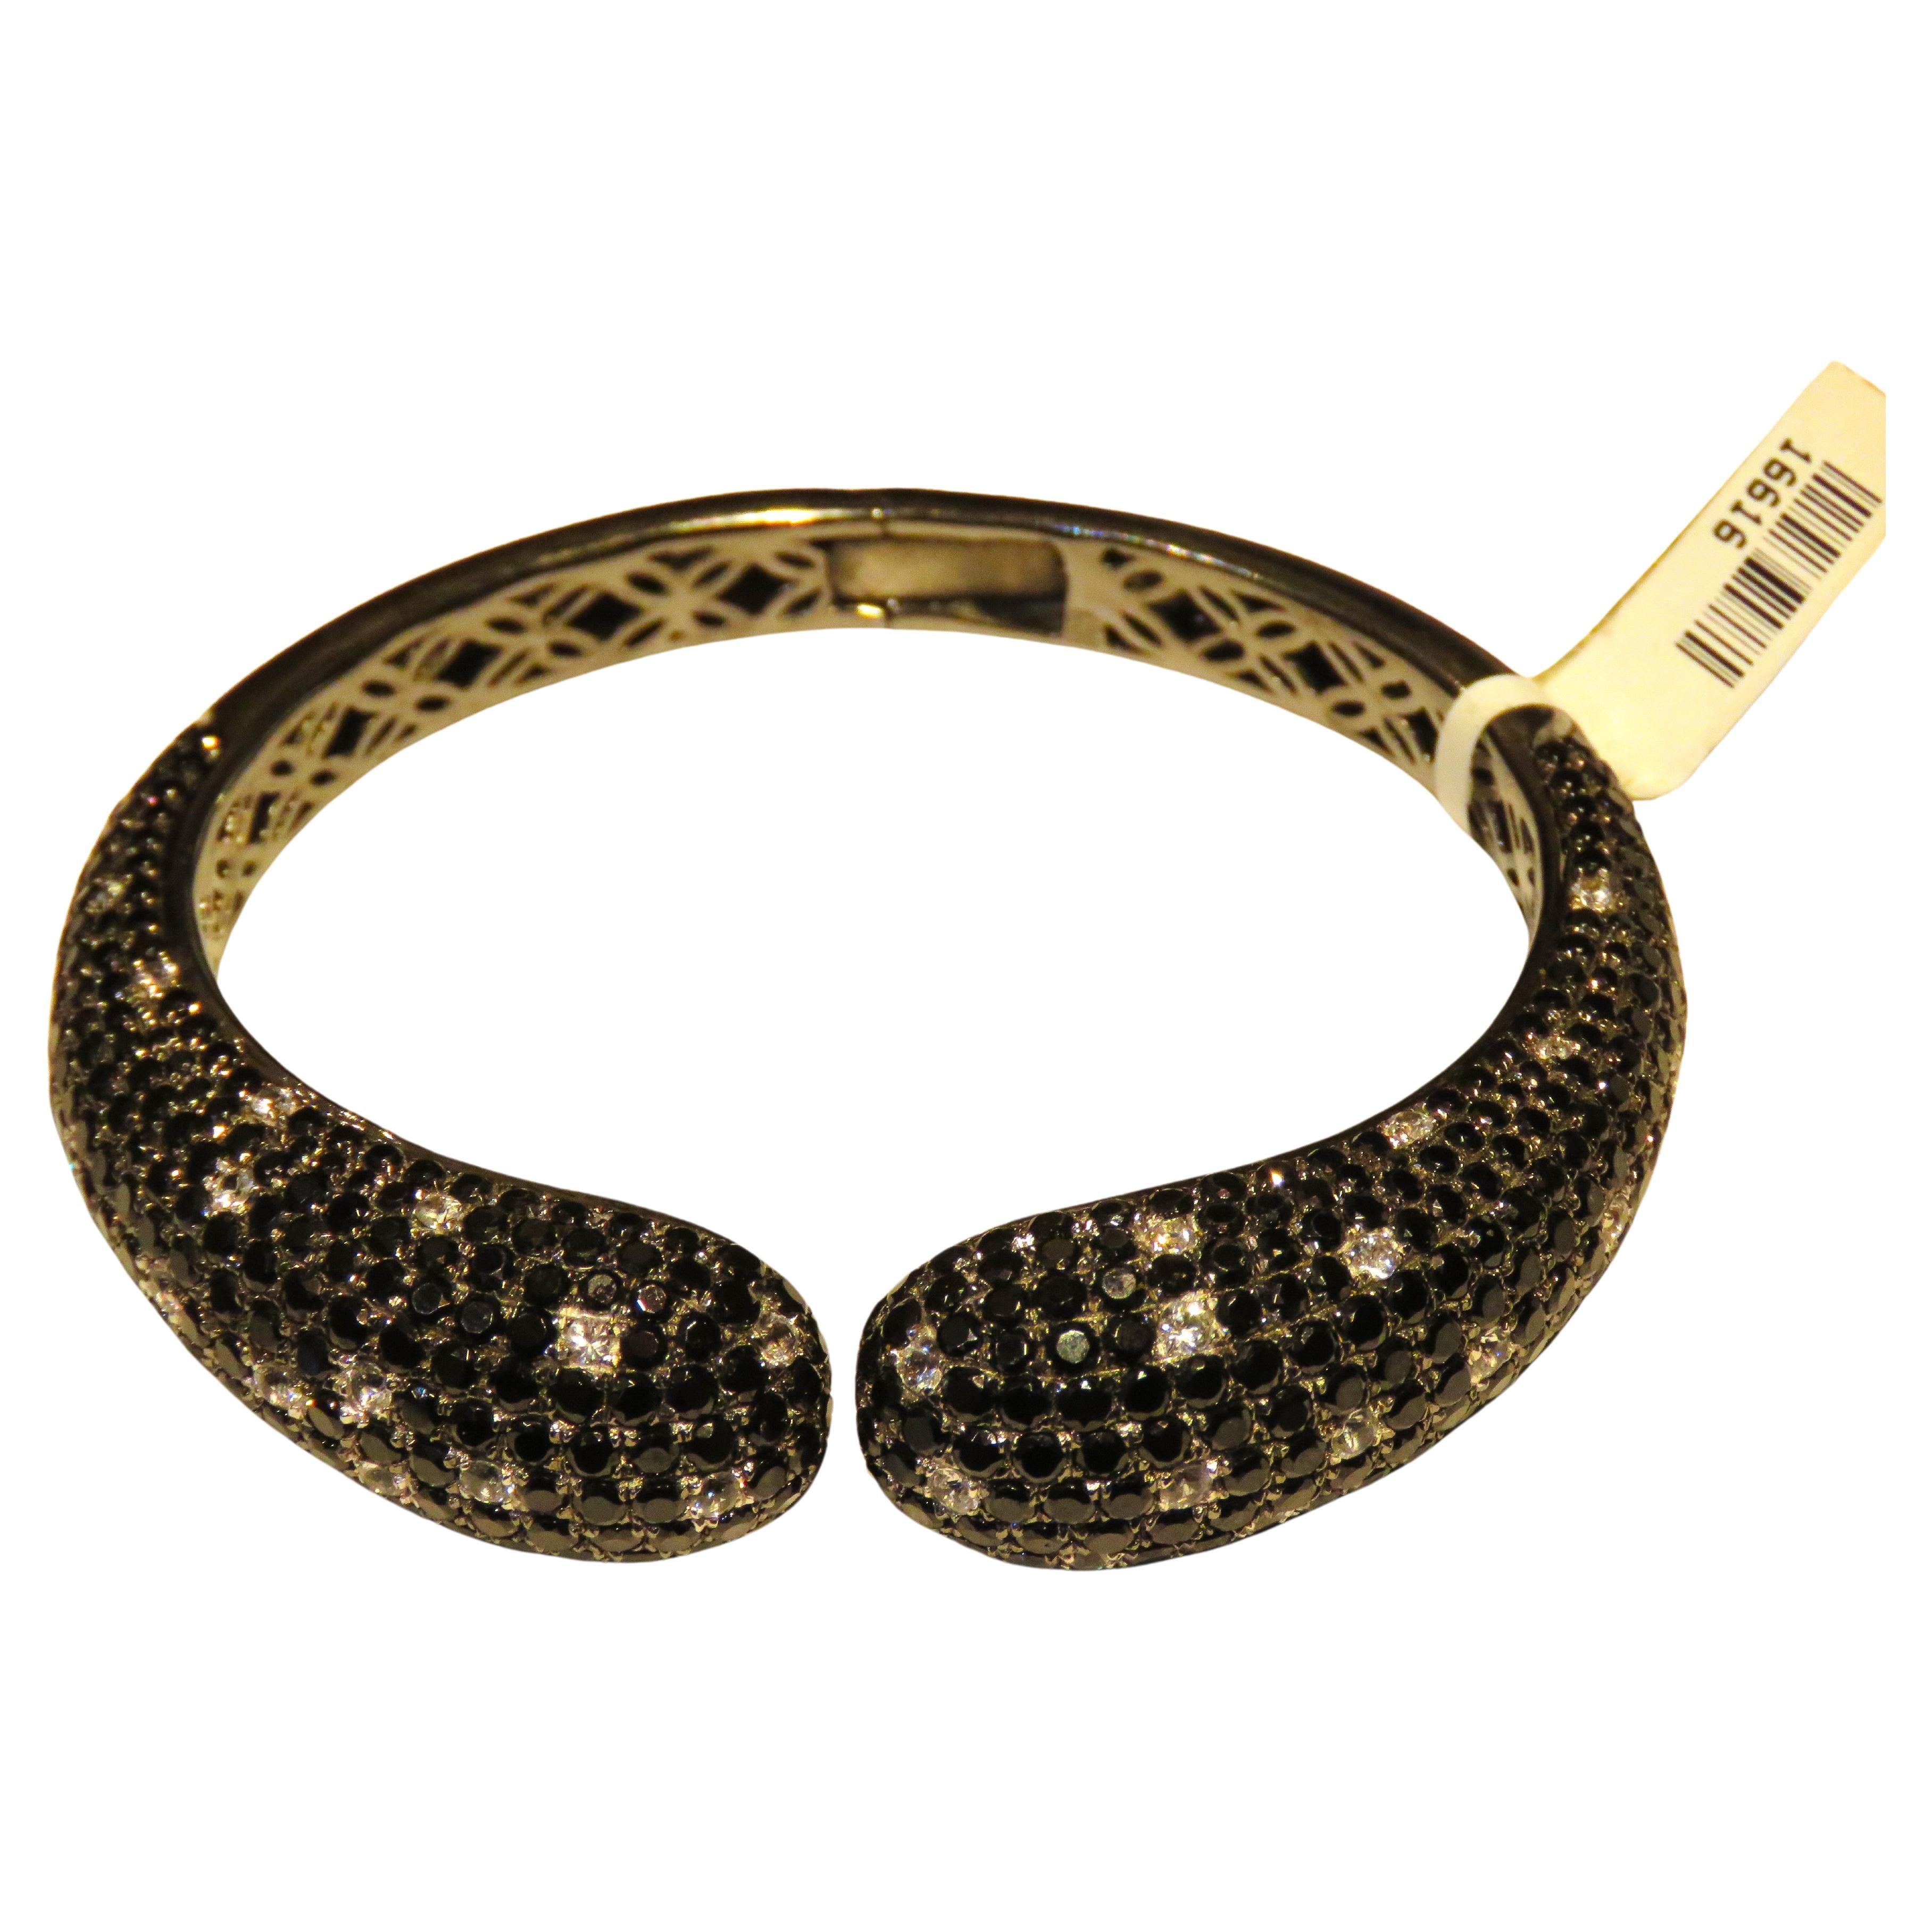 NWT $5, 500 Fancy Glittering 22CT Black White Sapphire Bracelet Bangle Cuff